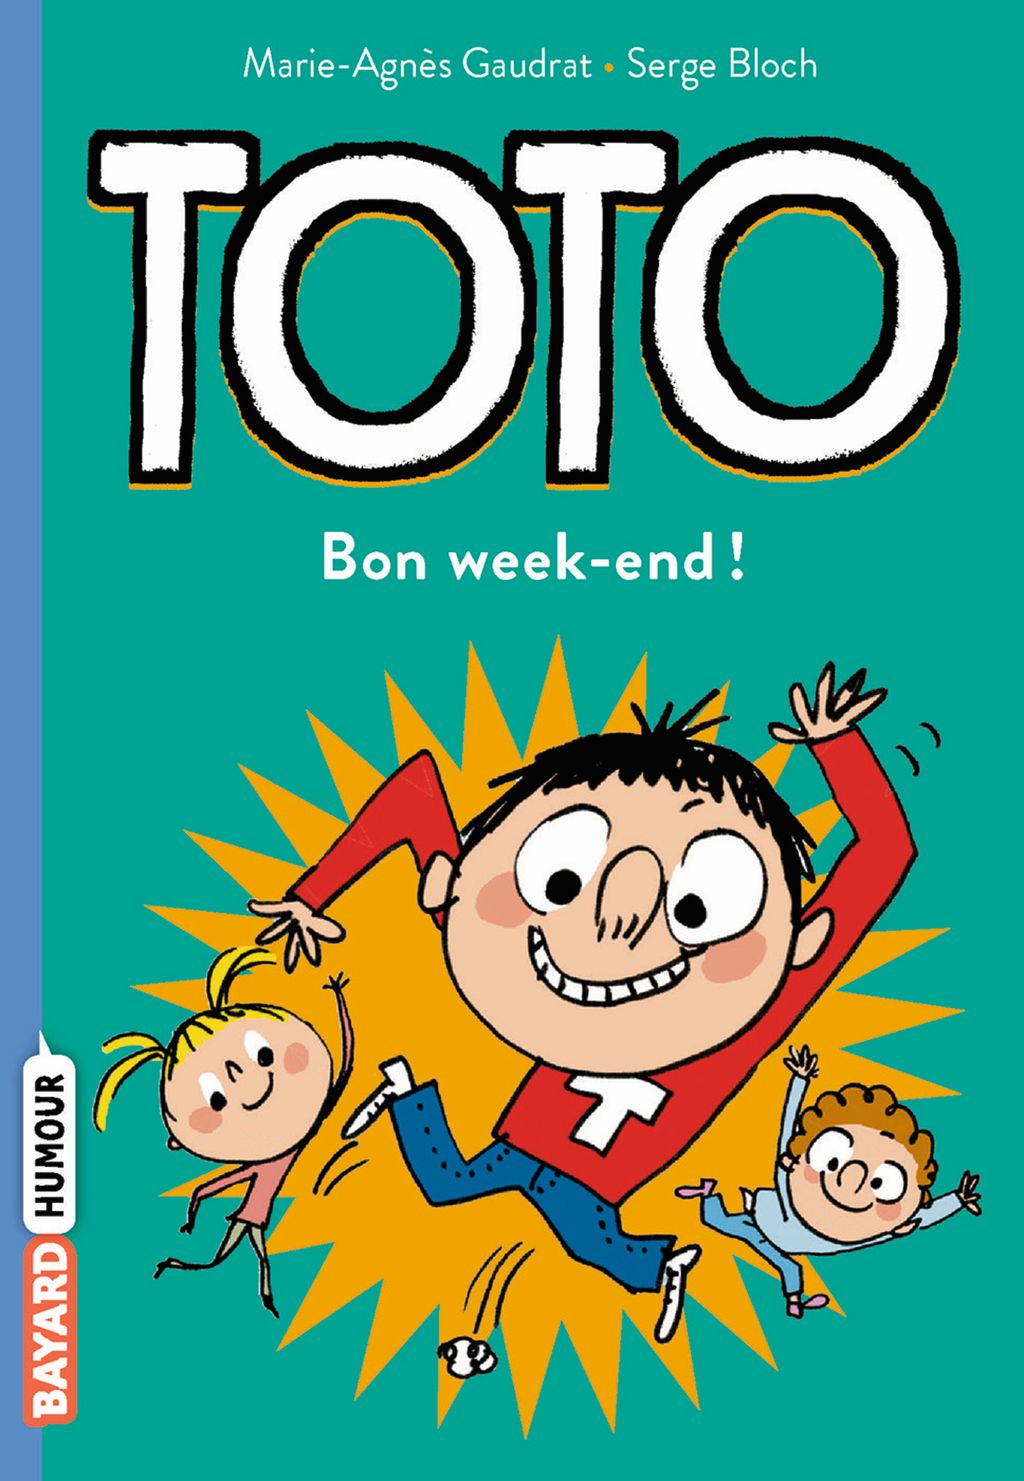 « Bon week-end, Toto » cover